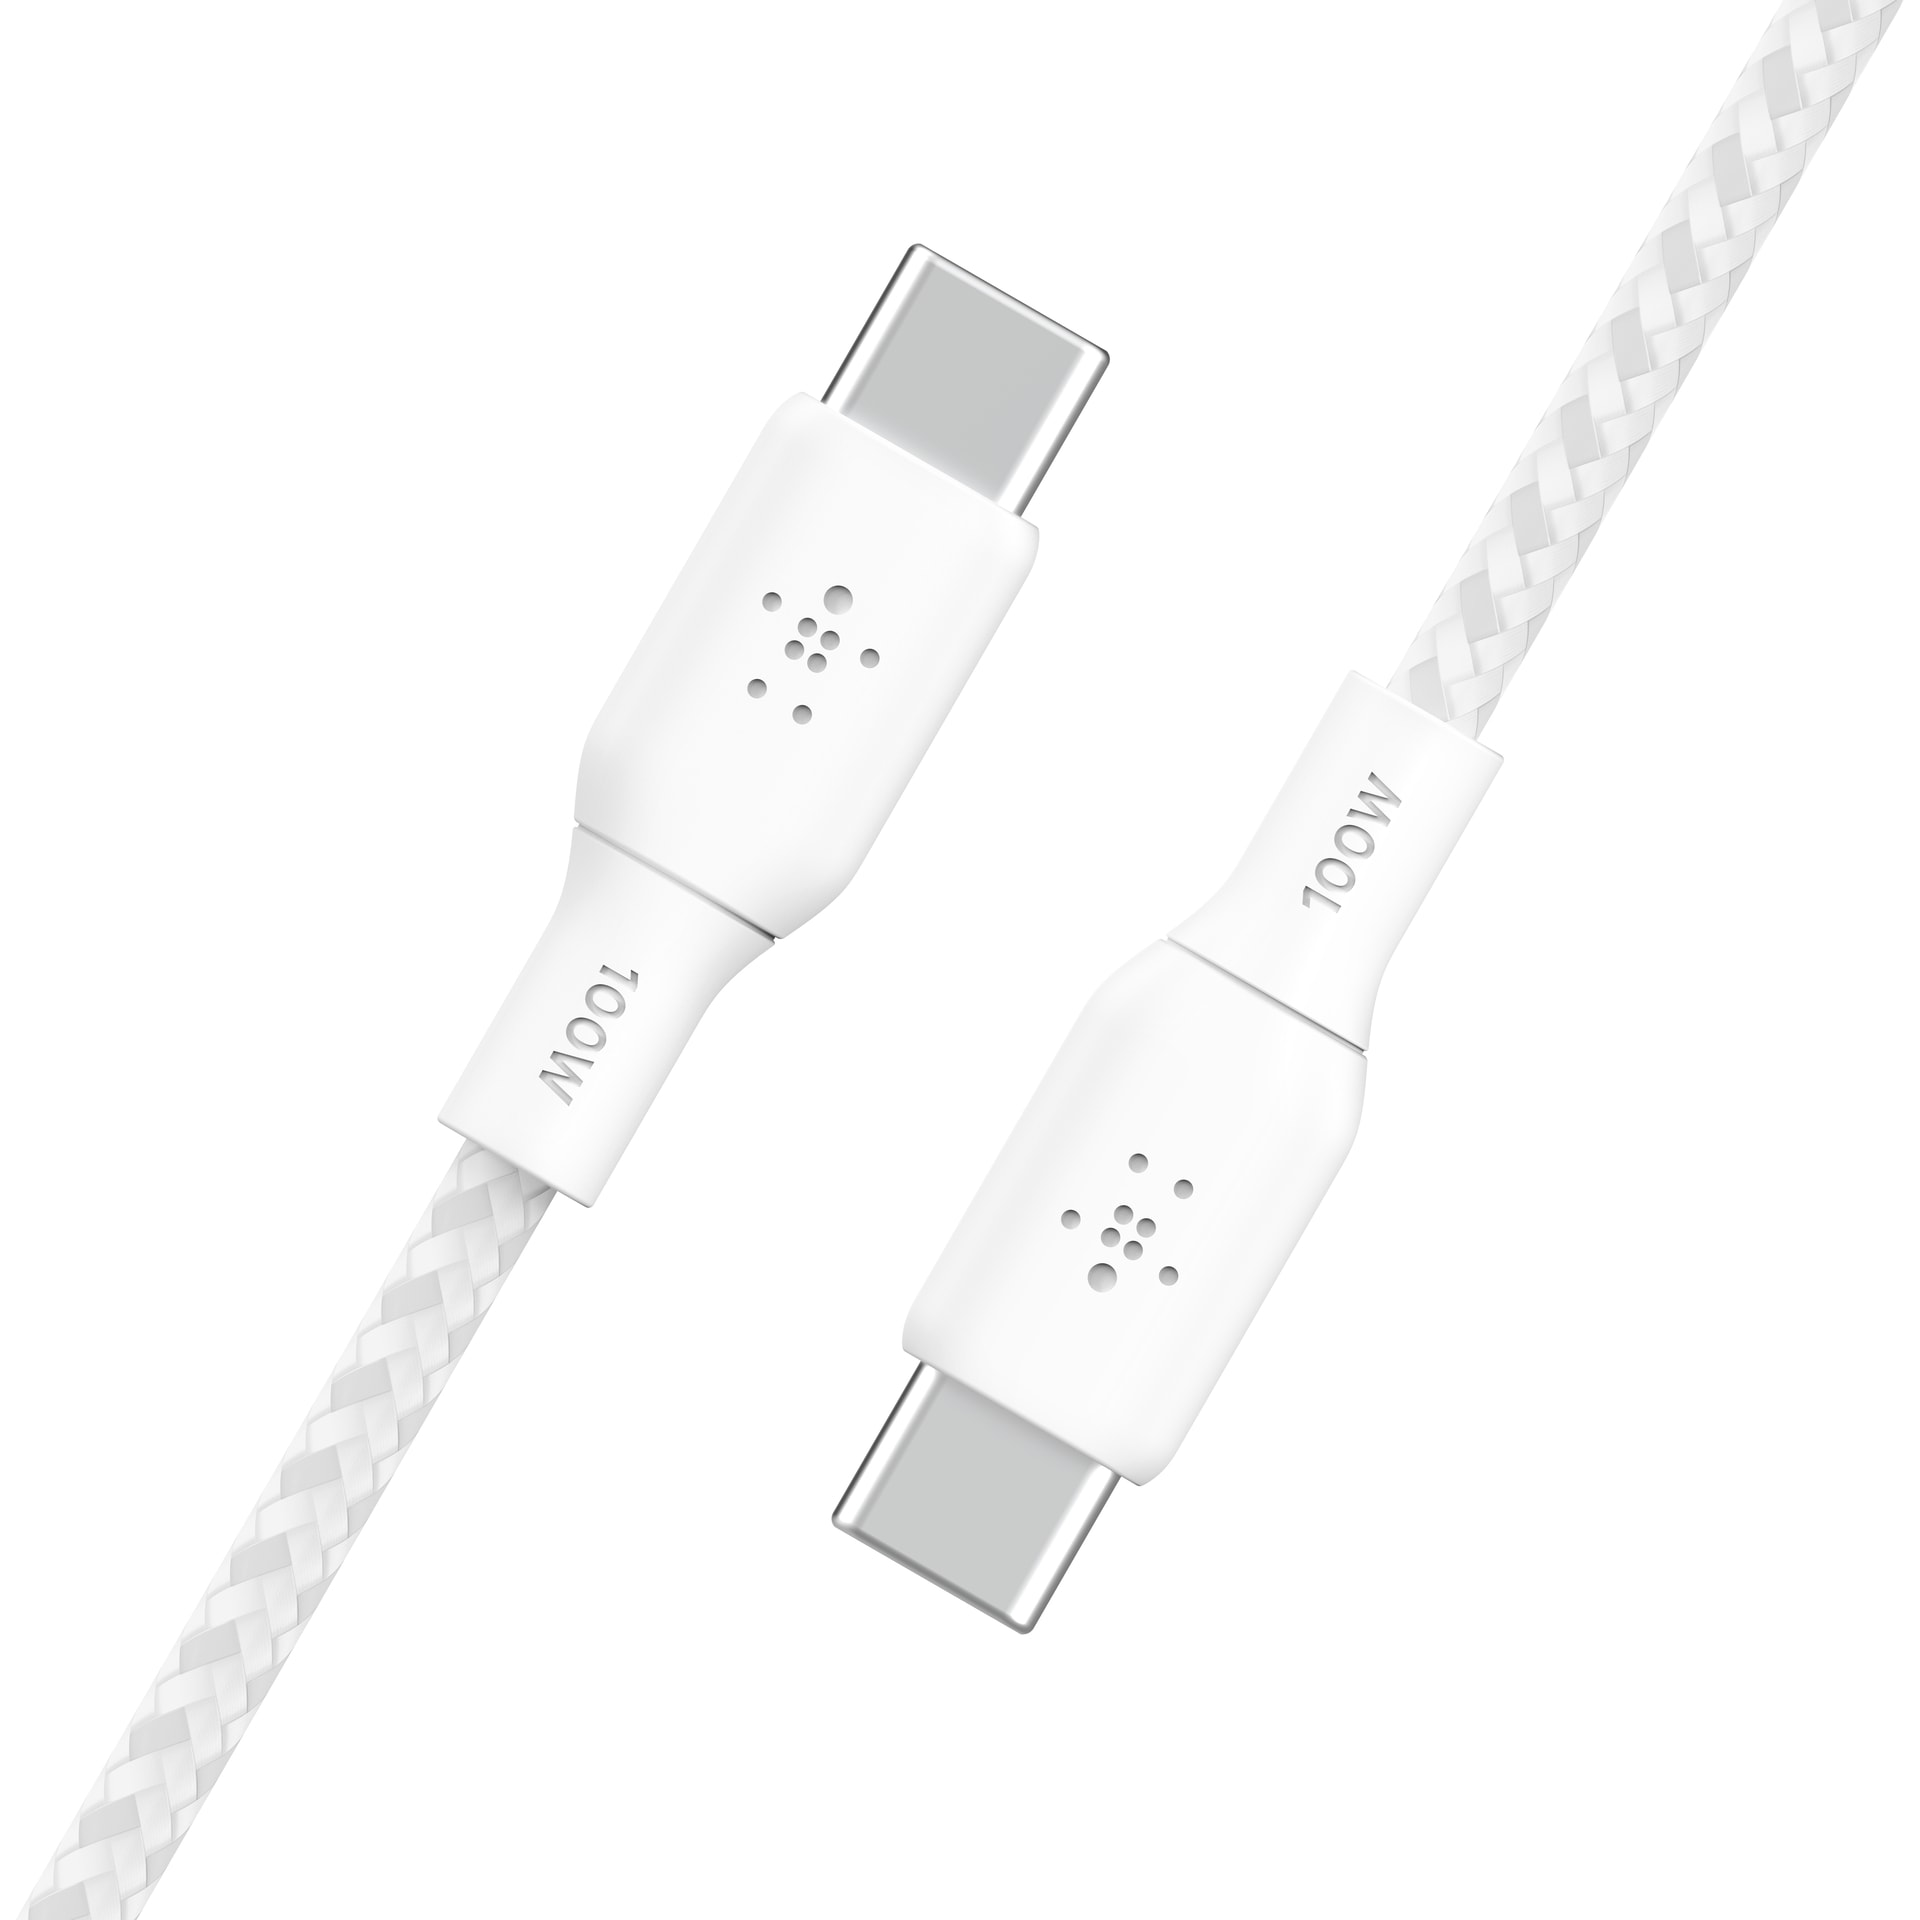 Belkin USB-Kabel »BOOST CHARGE USB-C/USB-C Kabel, bis 100 W, 3m«, USB Typ C-USB Typ C, 300 cm